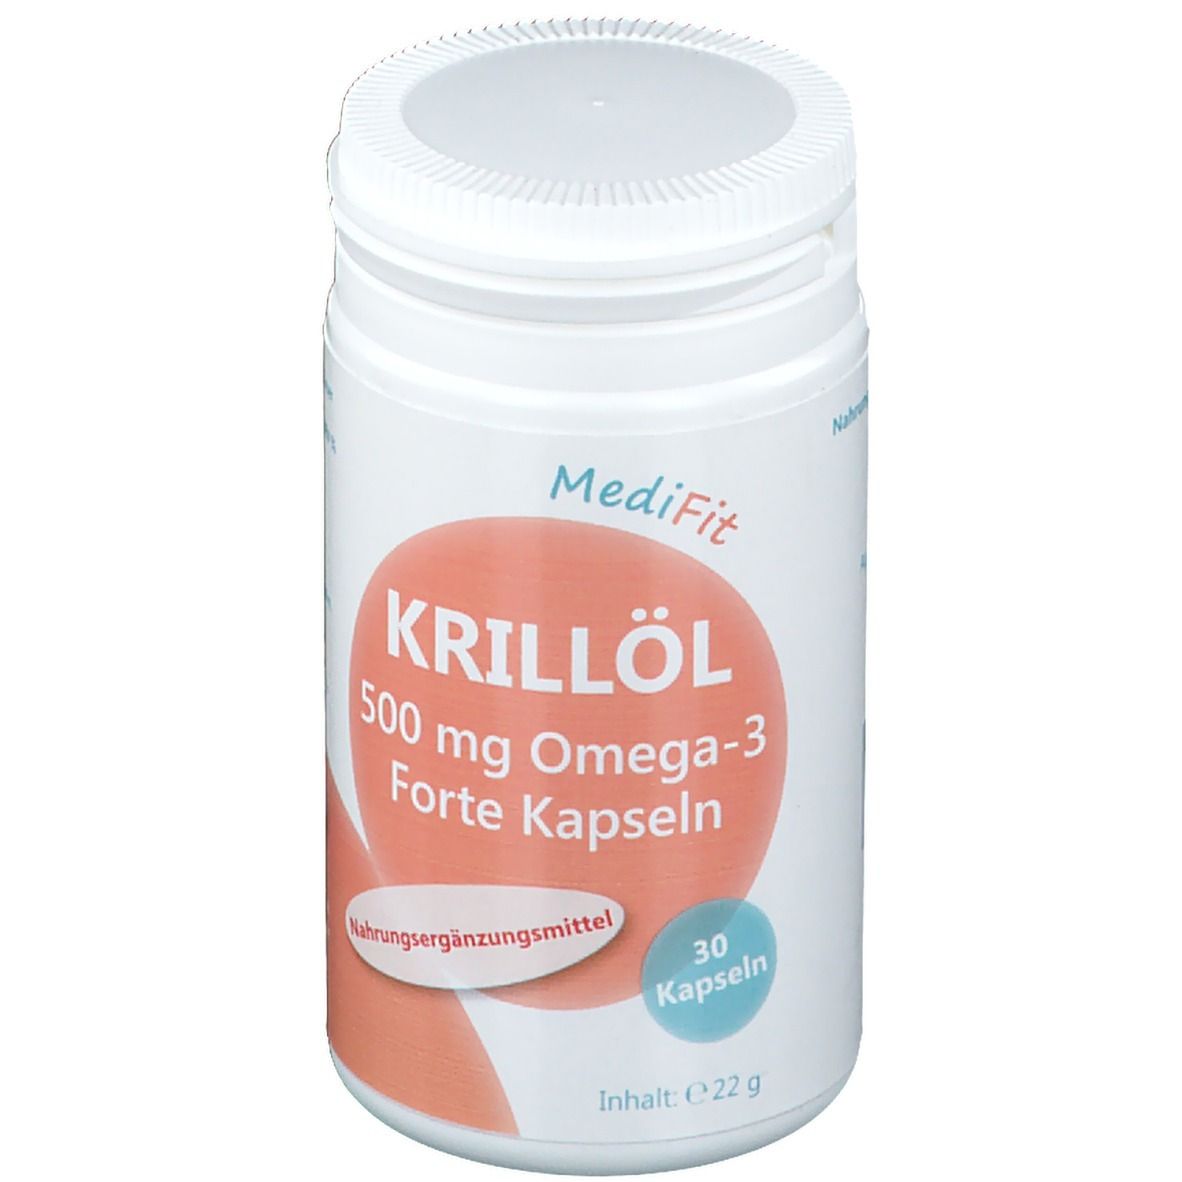 MediFit Krillöl 500mg Omega-3 Forte